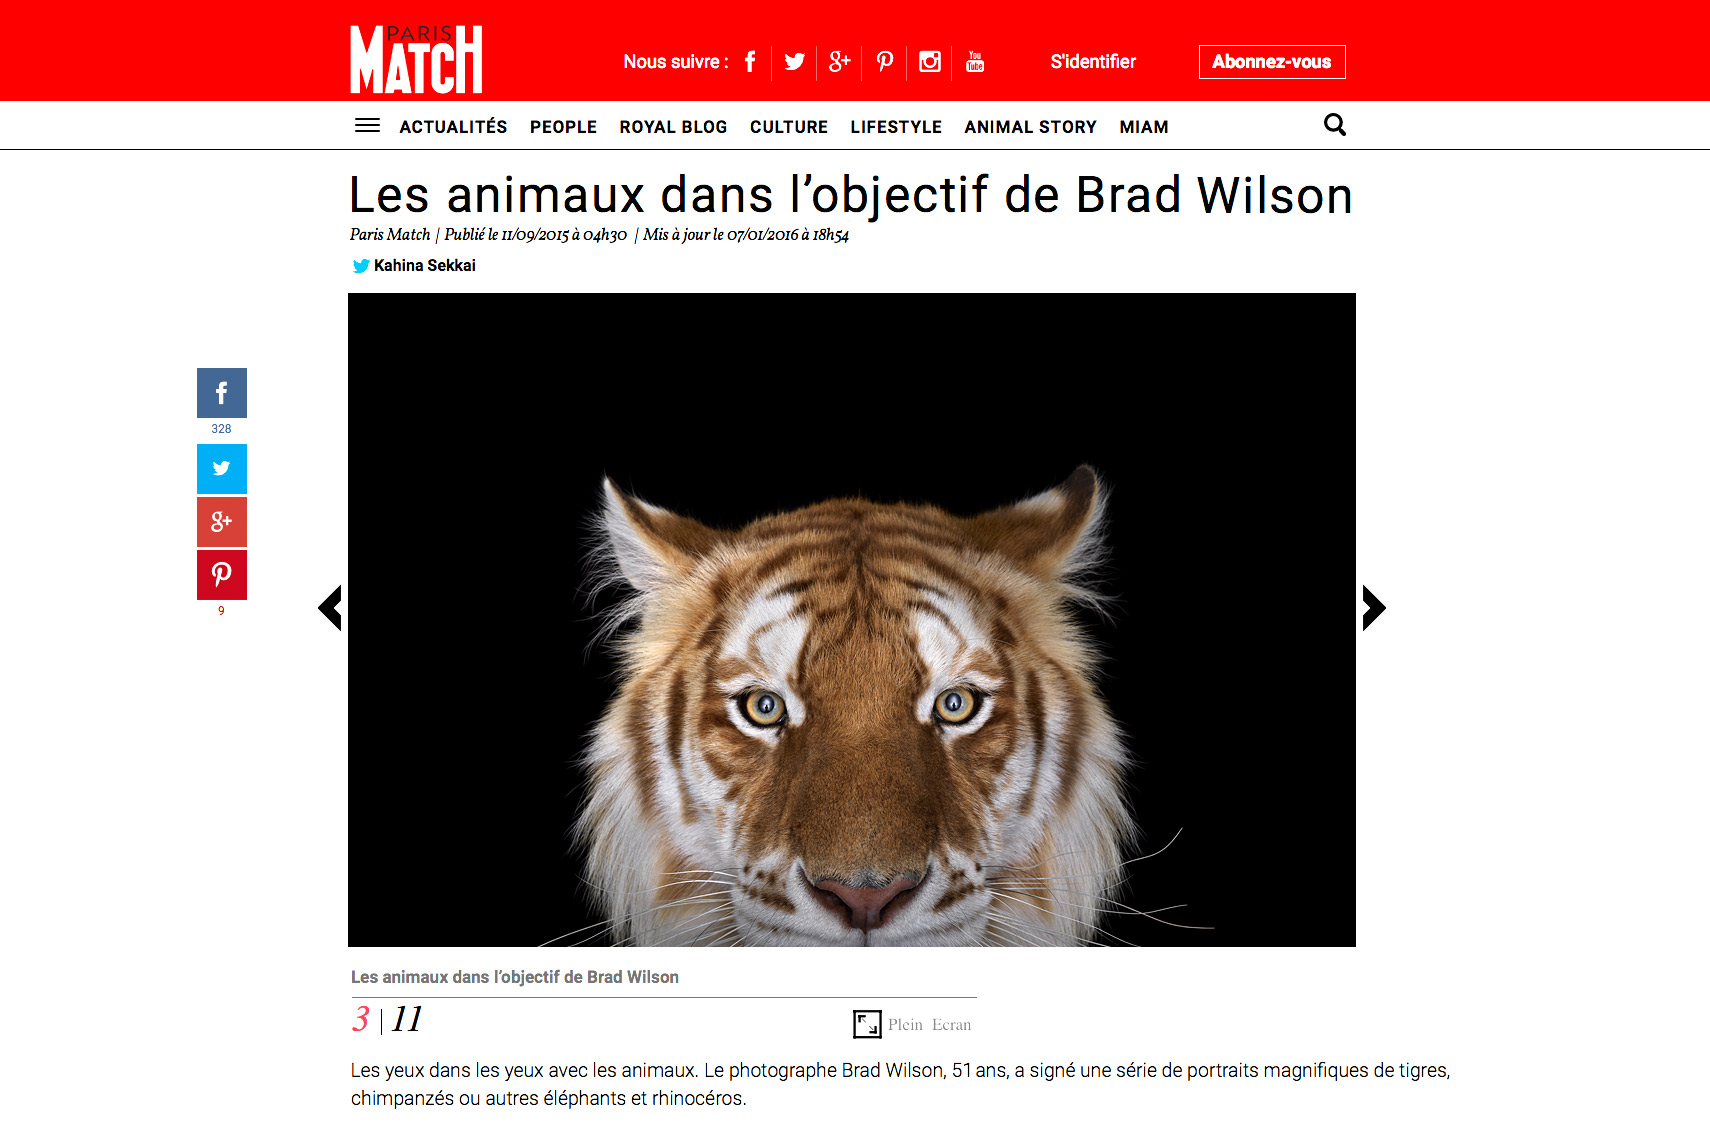 Paris Match article about fine art wildlife photographer Brad Wilson